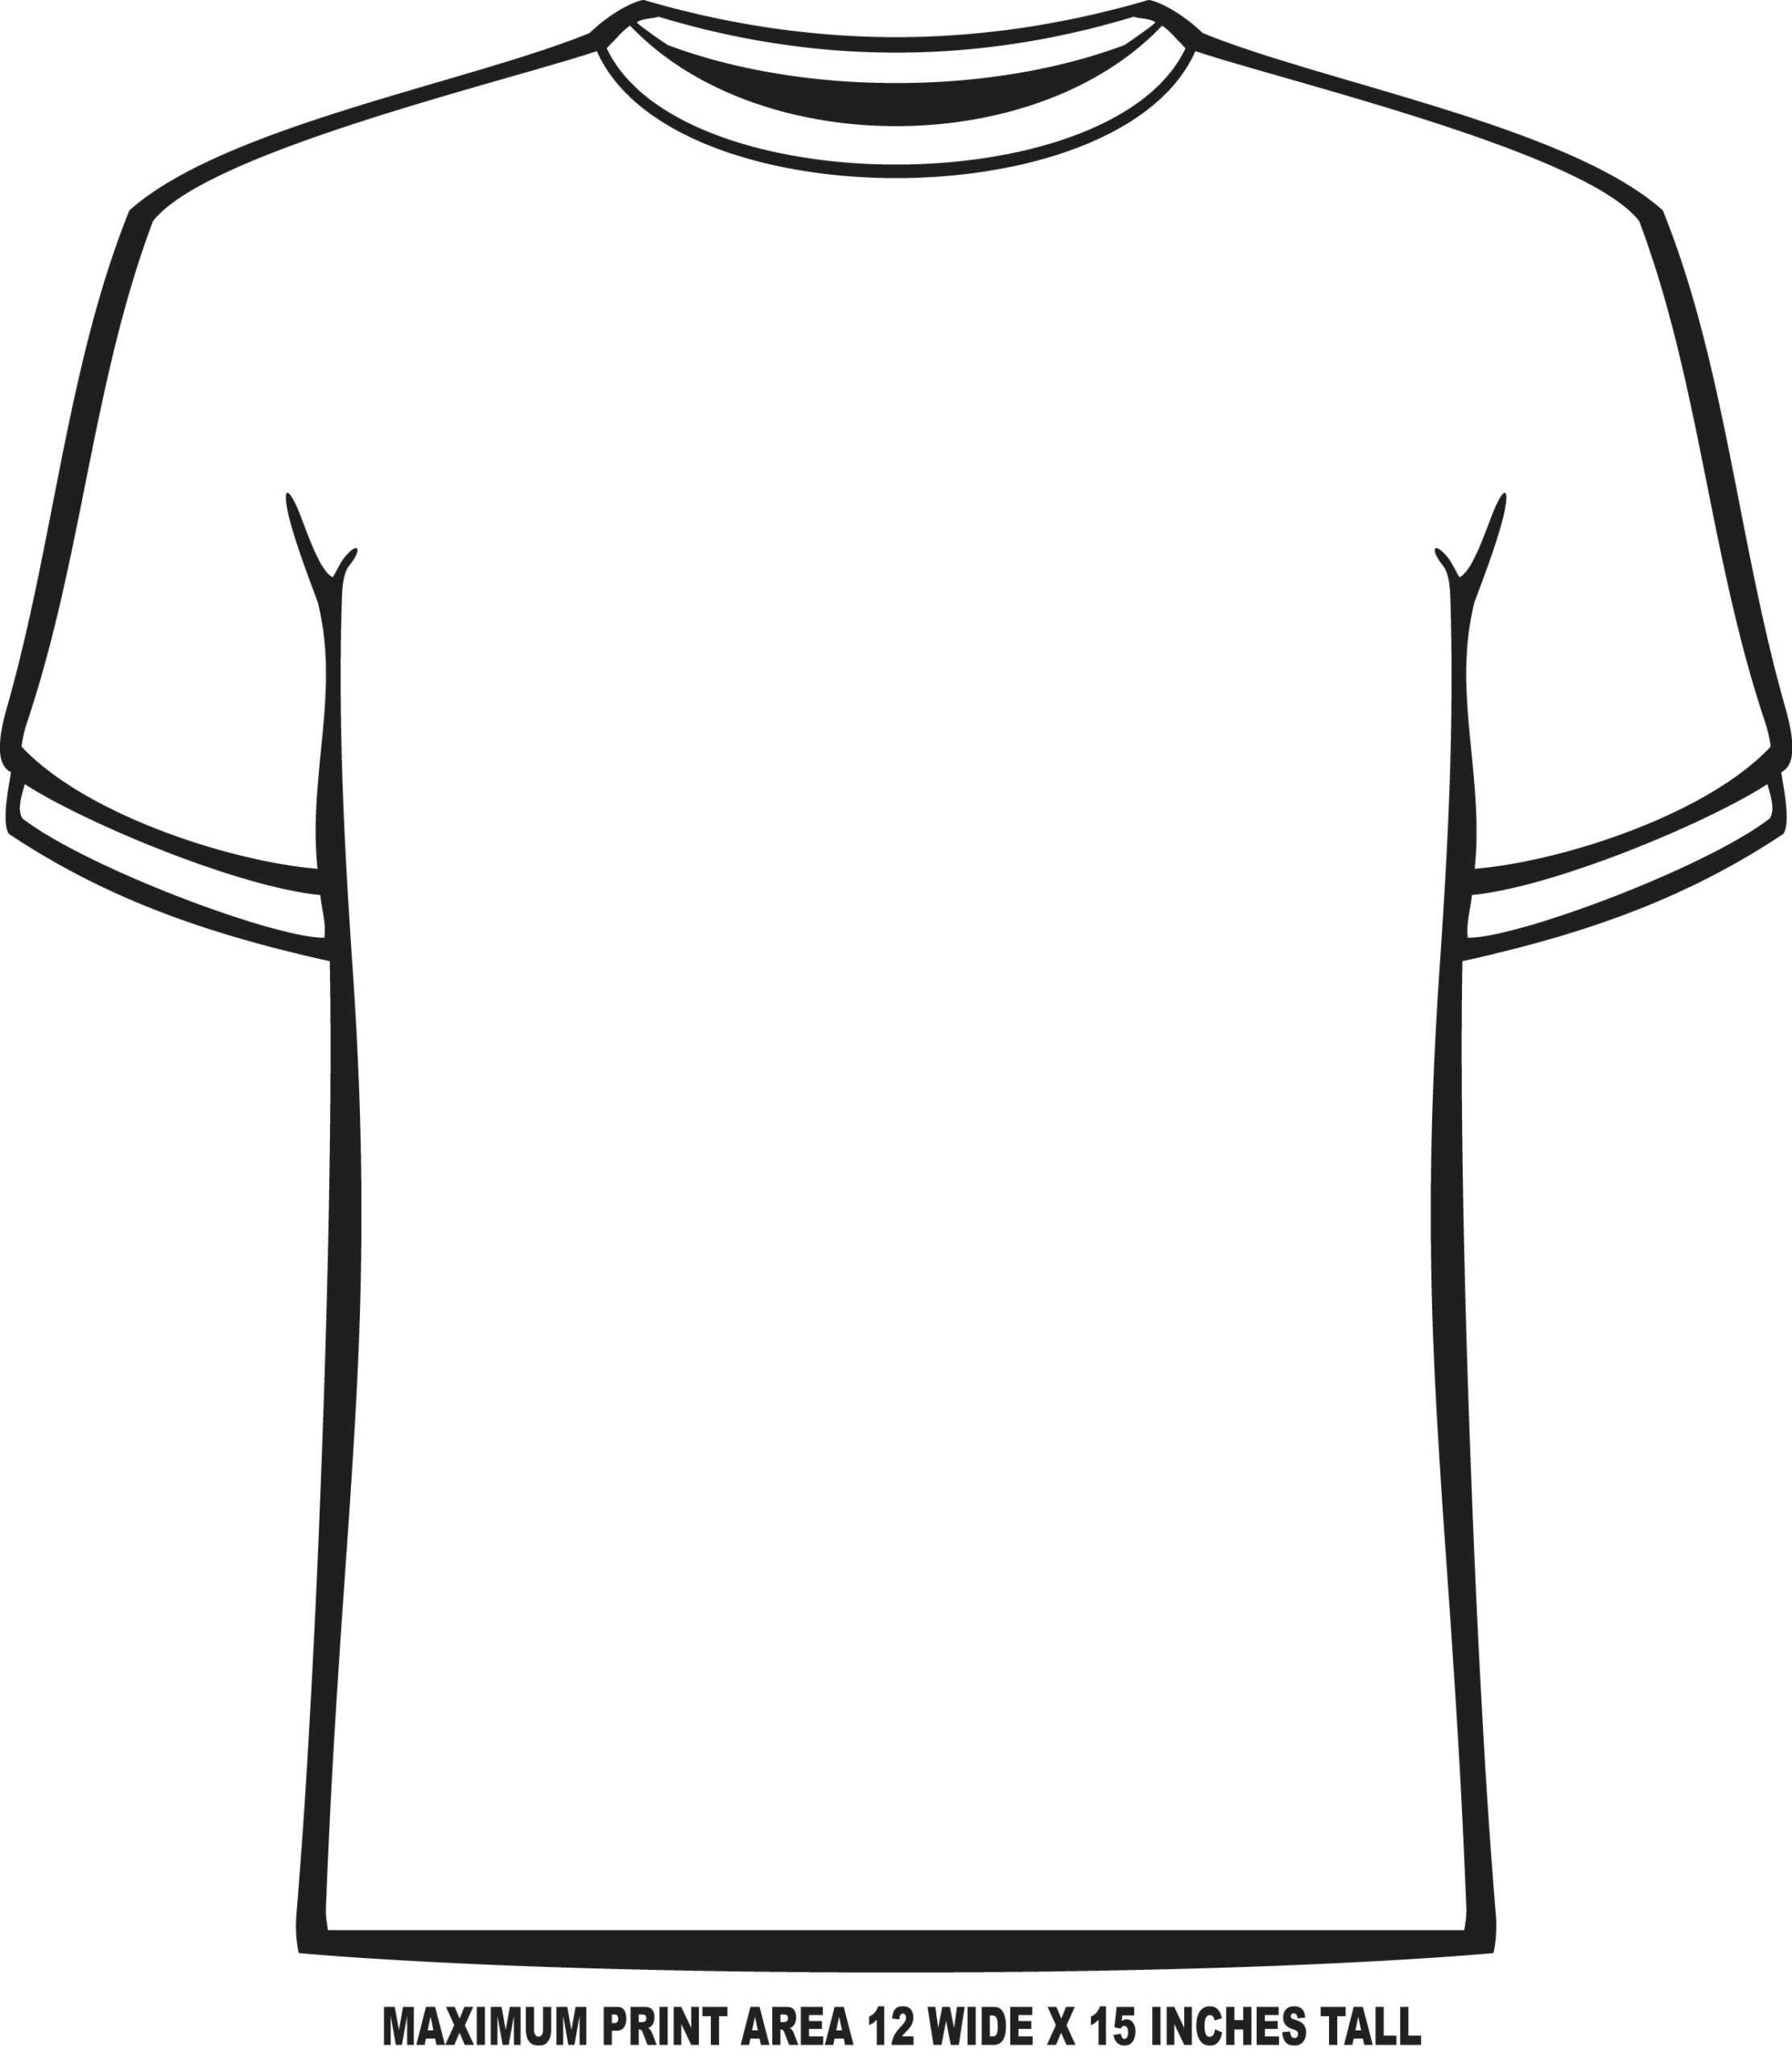 Blank Tshirt Template Pdf - Dreamworks Intended For Blank Tshirt Template Pdf